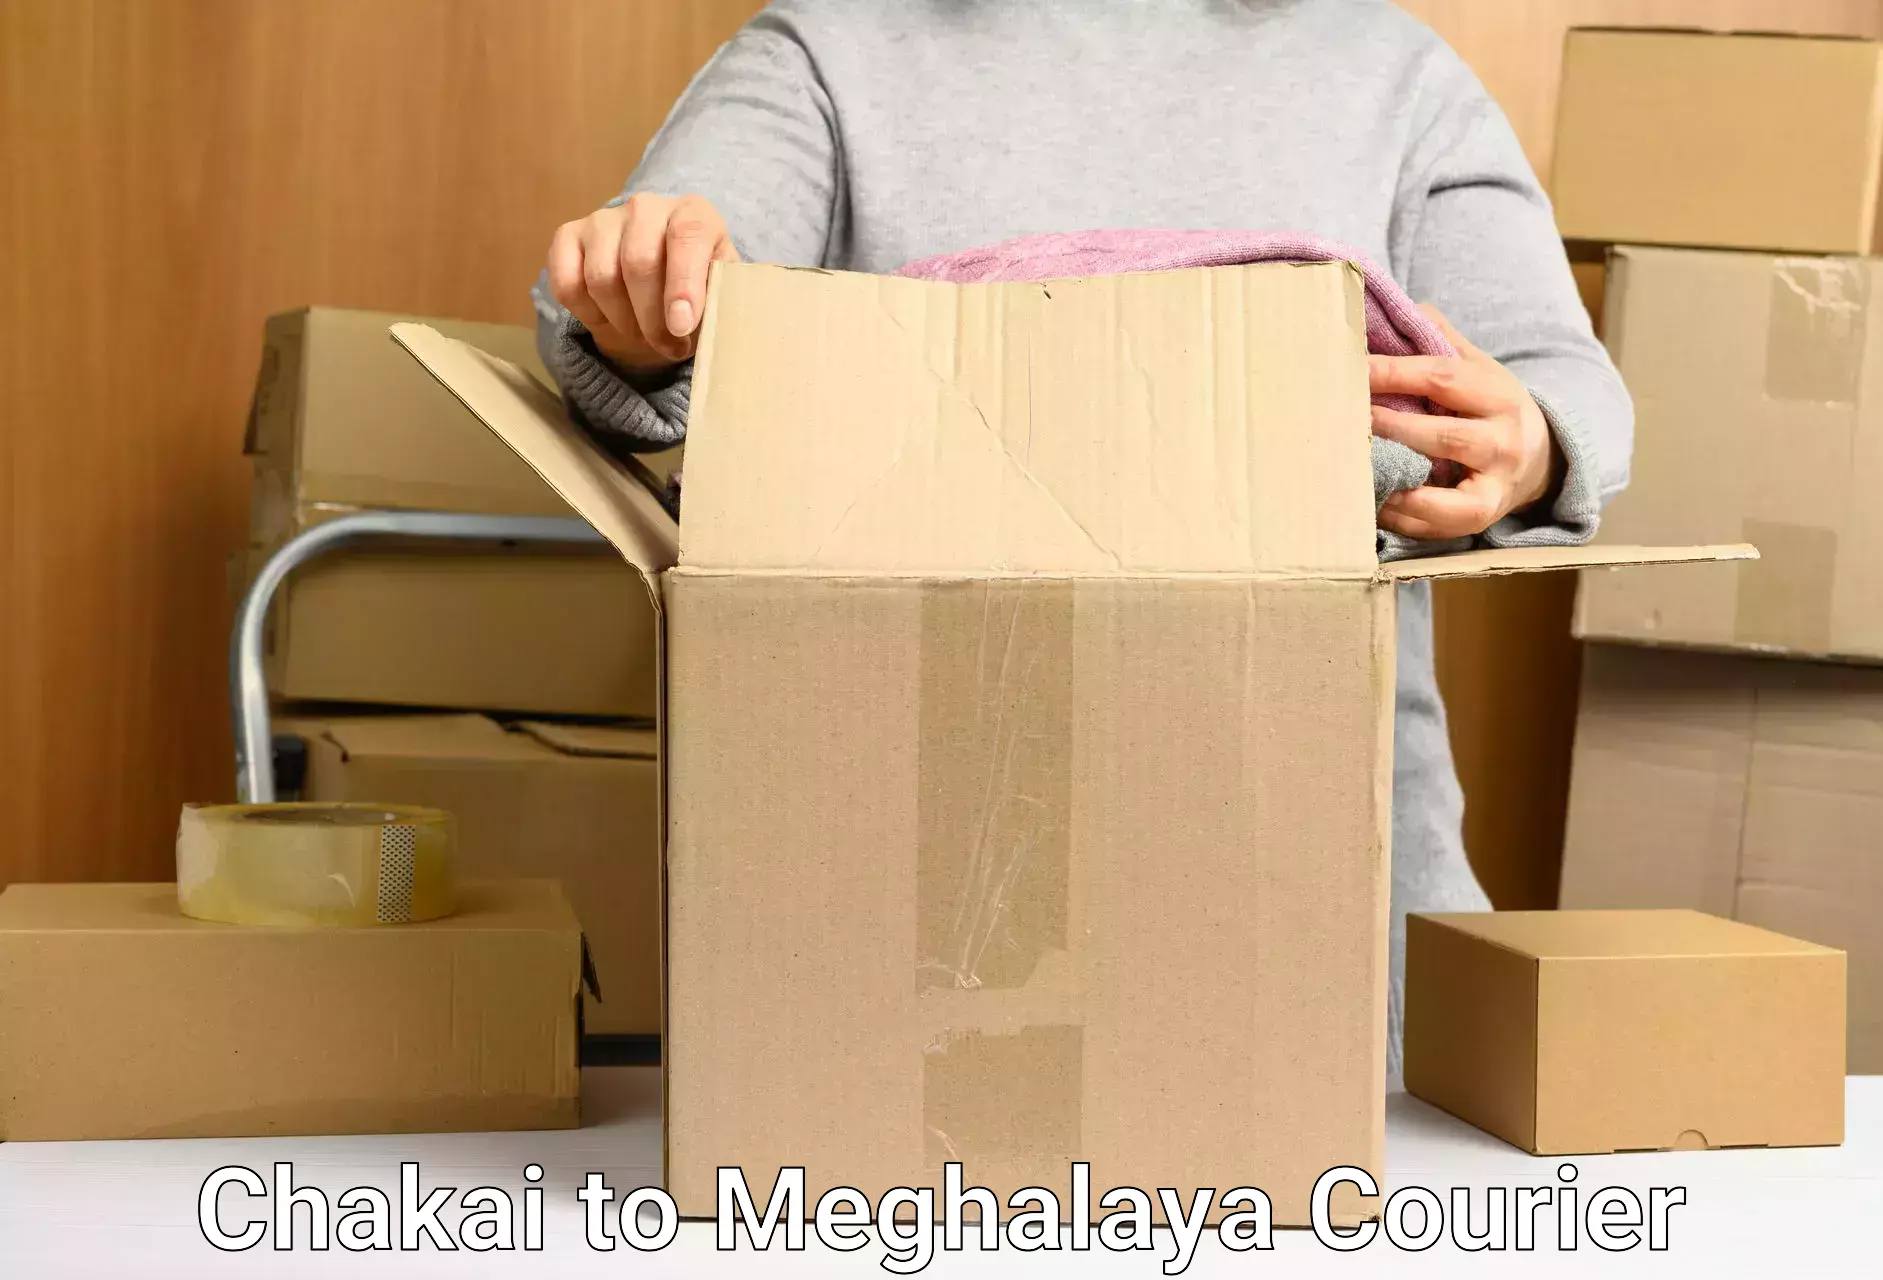 State-of-the-art courier technology Chakai to Meghalaya